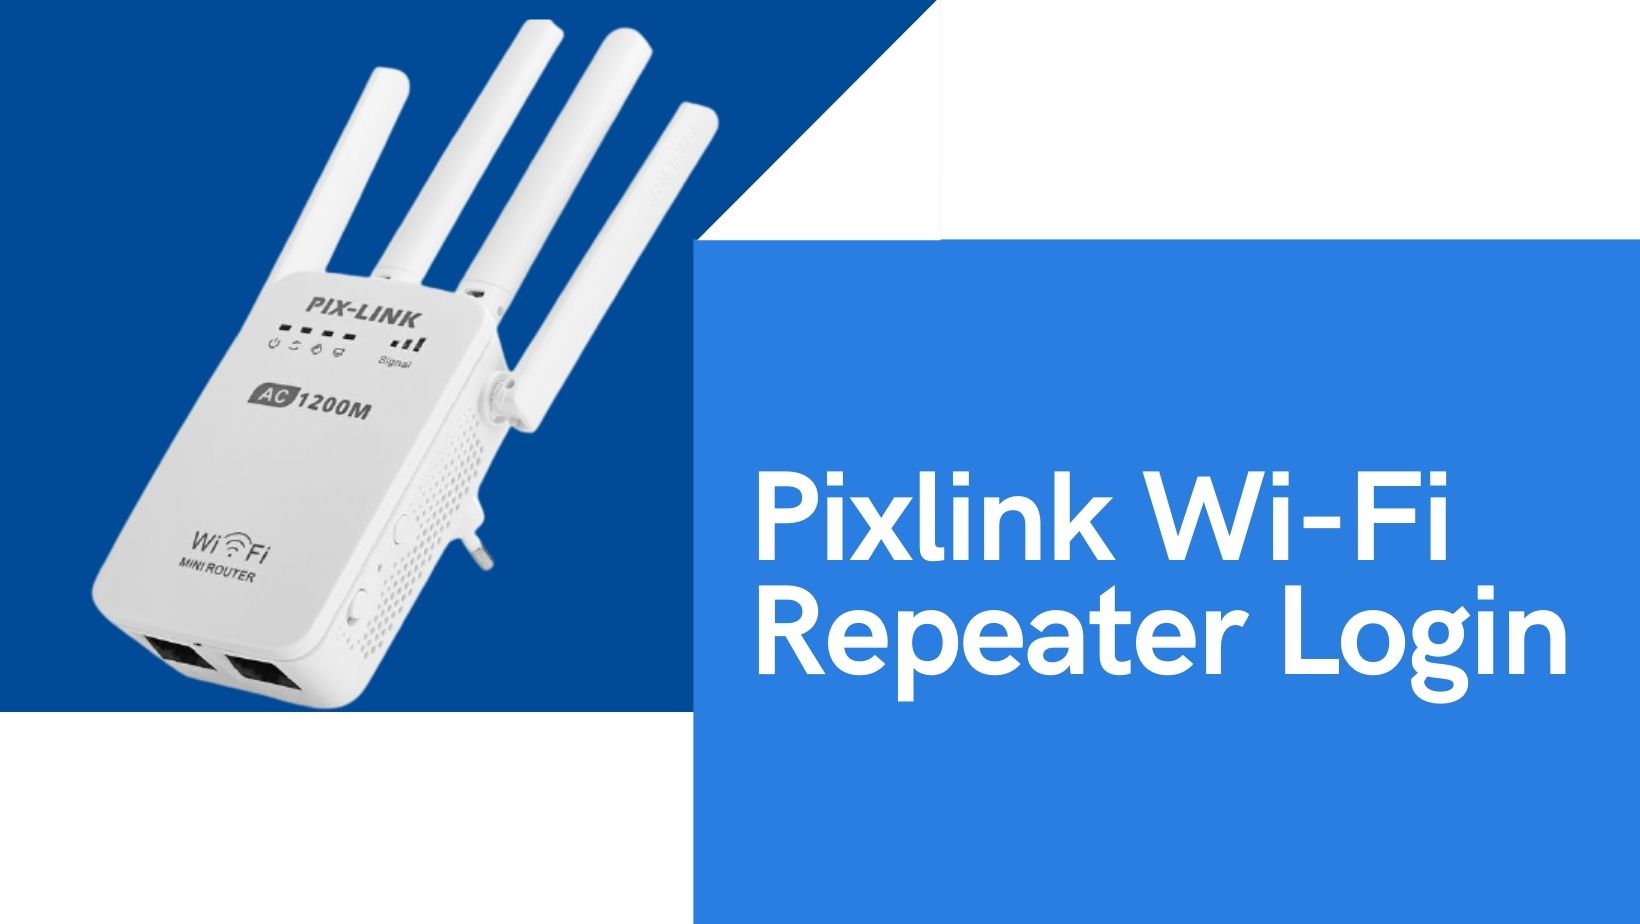 Pix-link Wi-Fi Repeater Login using myrepeater.net